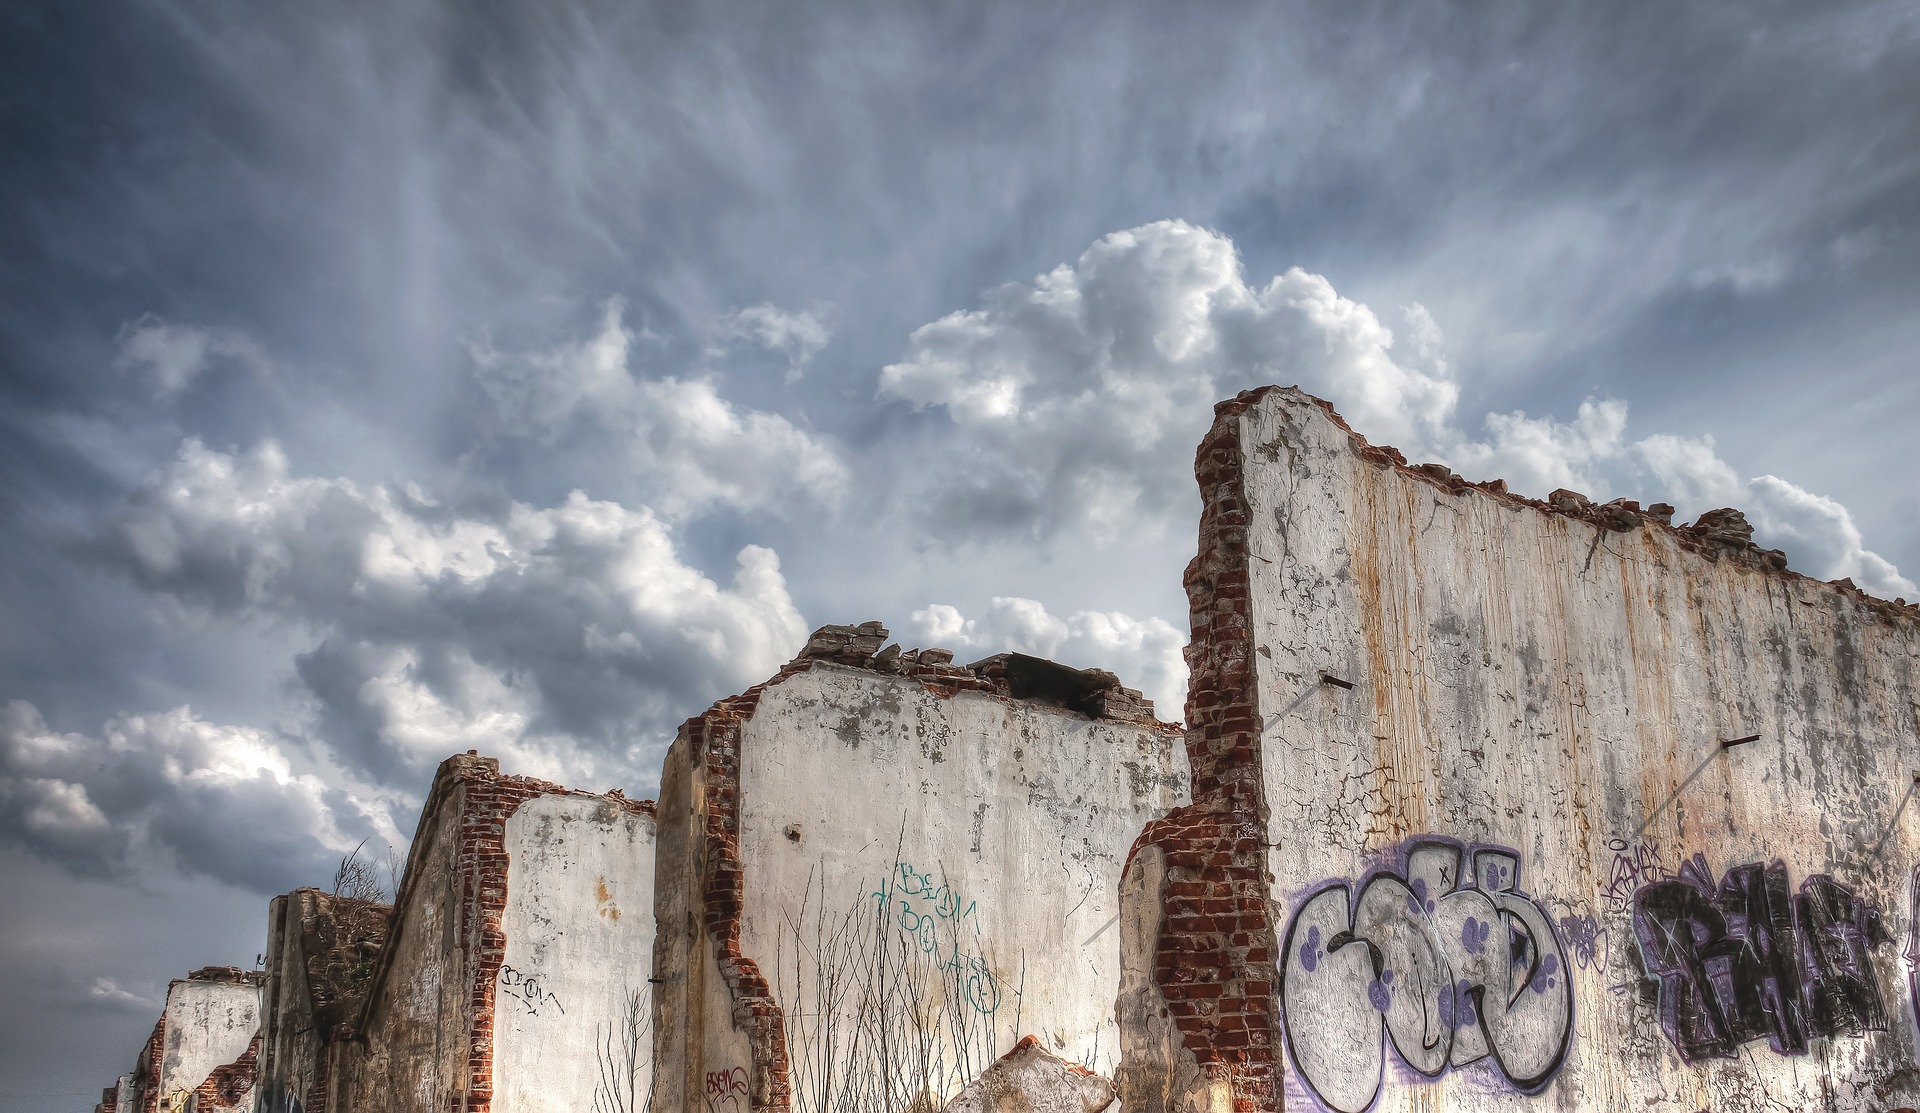 ruined brick walls with graffiti